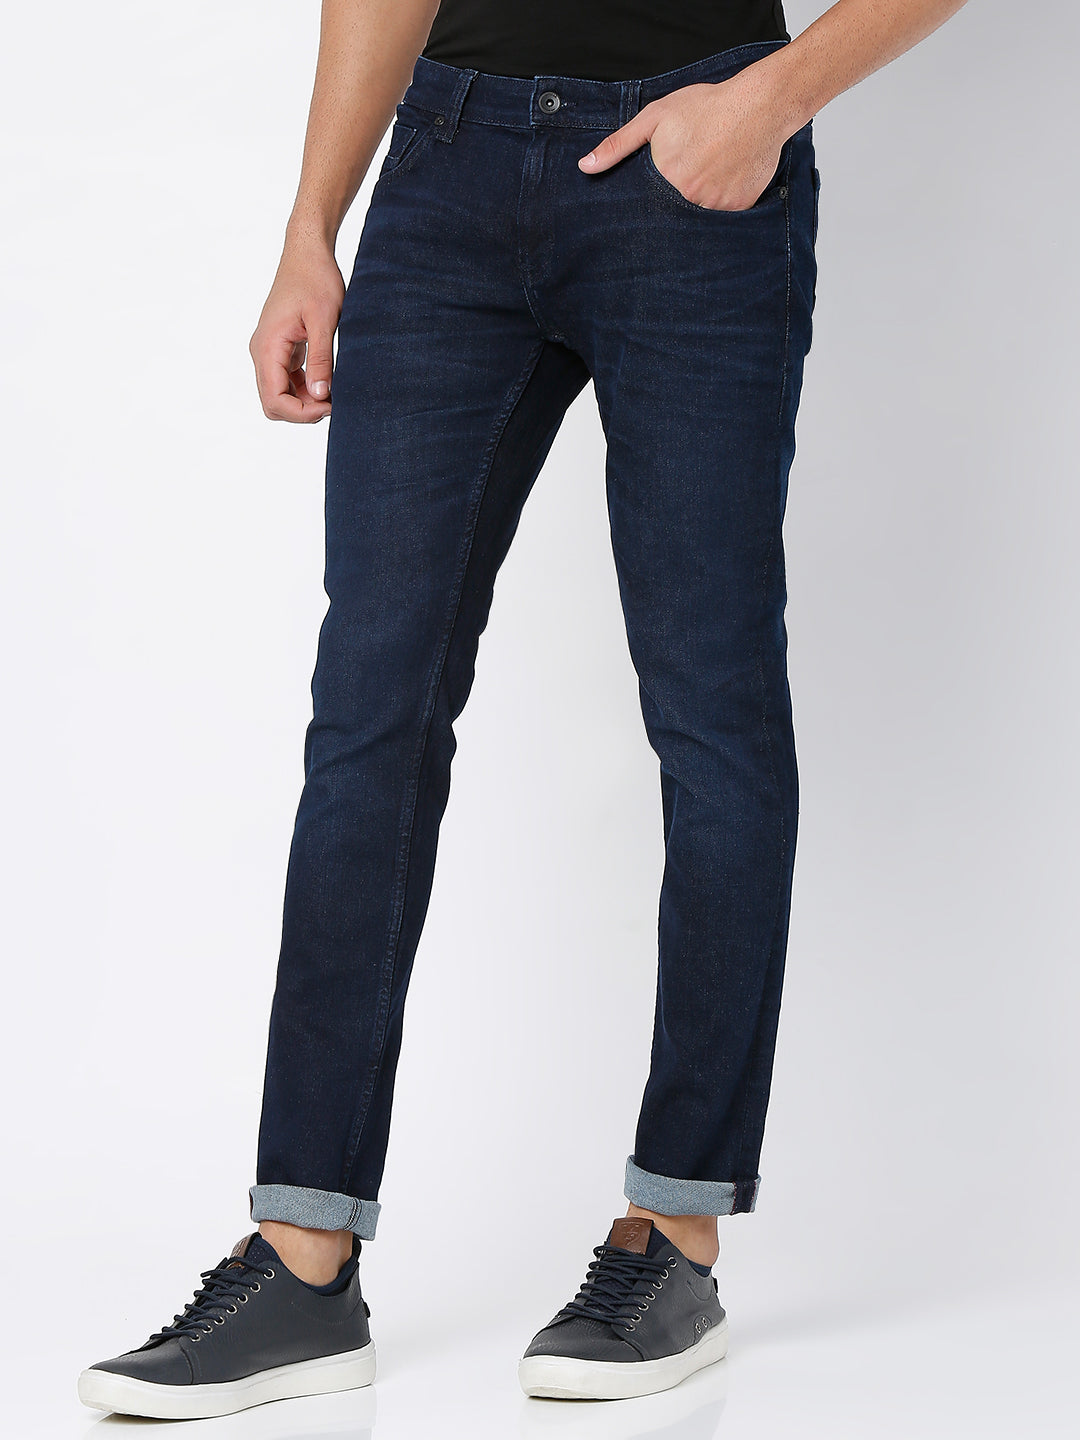 Spykar Dark Blue Cotton Slim Fit Narrow Length Jeans For Men (Skinny)